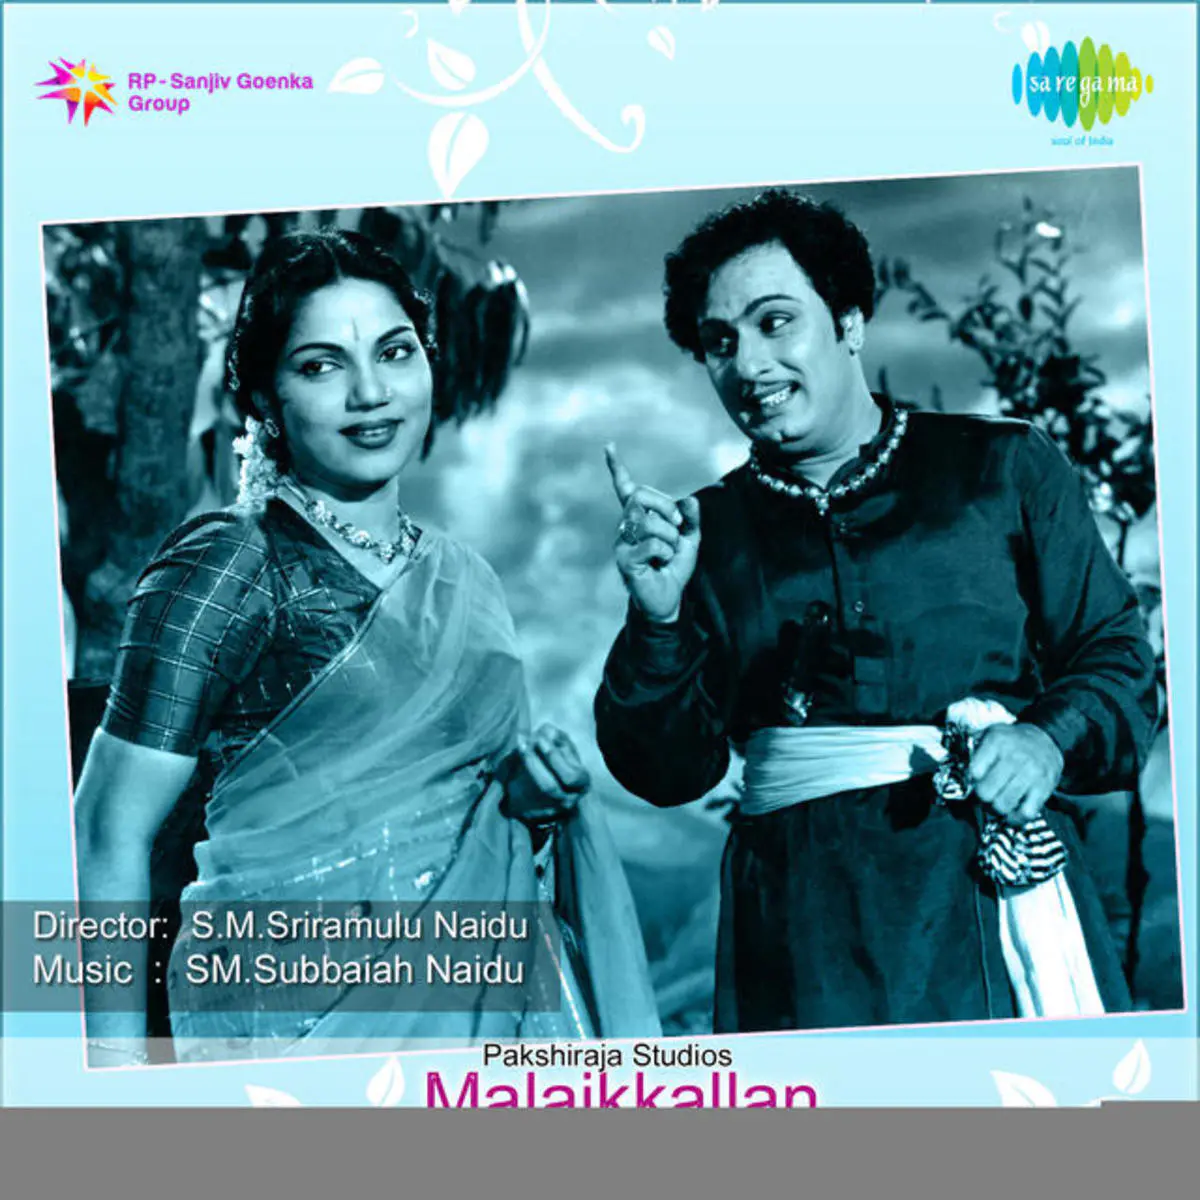 Alibabavum 40 thirudargalum tamil movie mp3 songs free, download bollywood